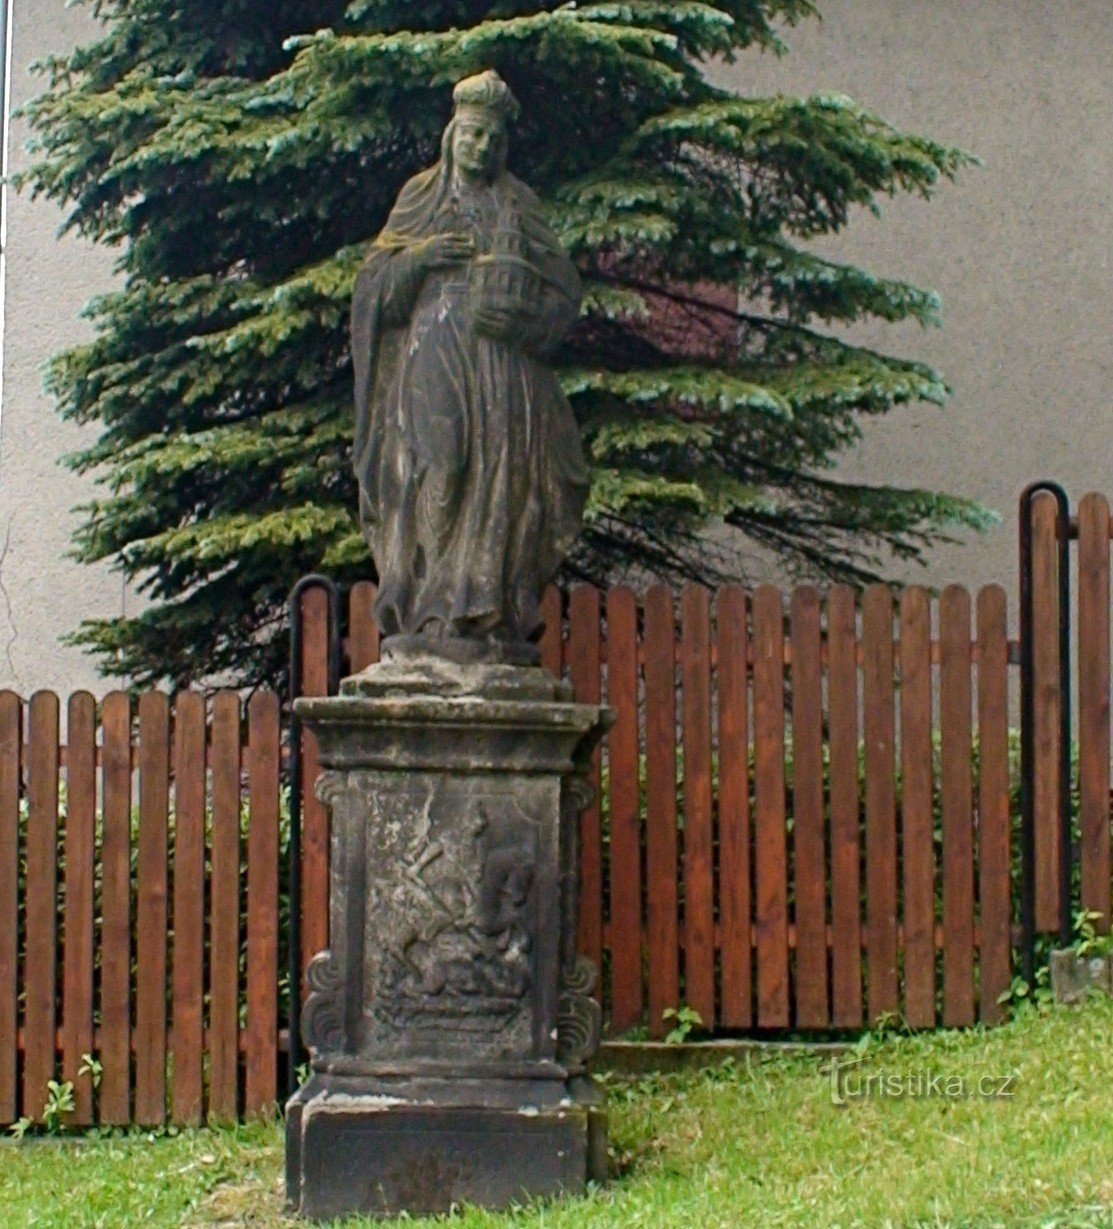 Statua barocca di Petřvald